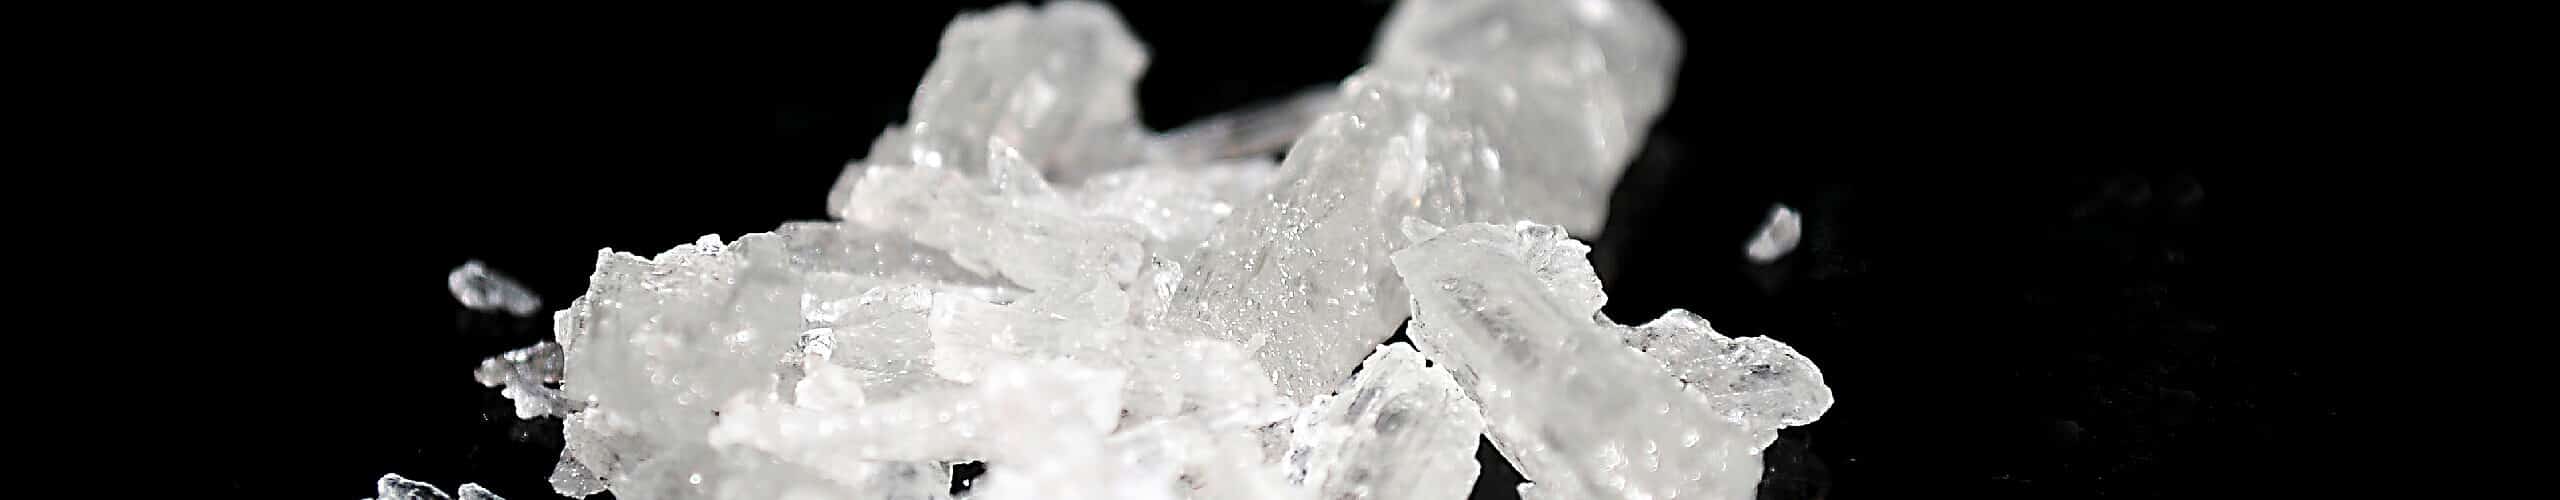 Afghanistan Tops Global Methamphetamine Production